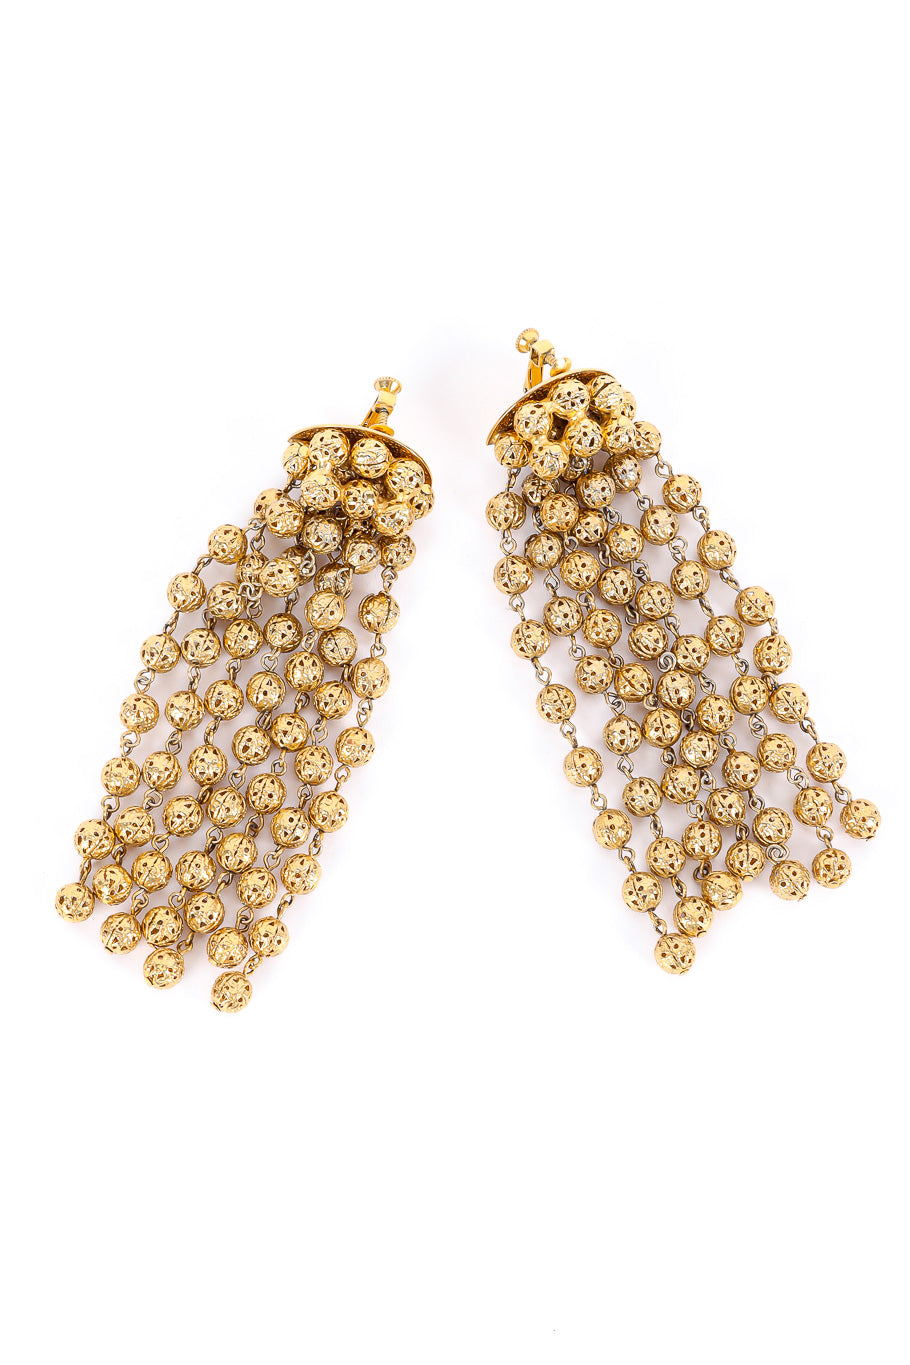 Long gold filigree ball shoulder duster drop earrings pair photo. @recessla